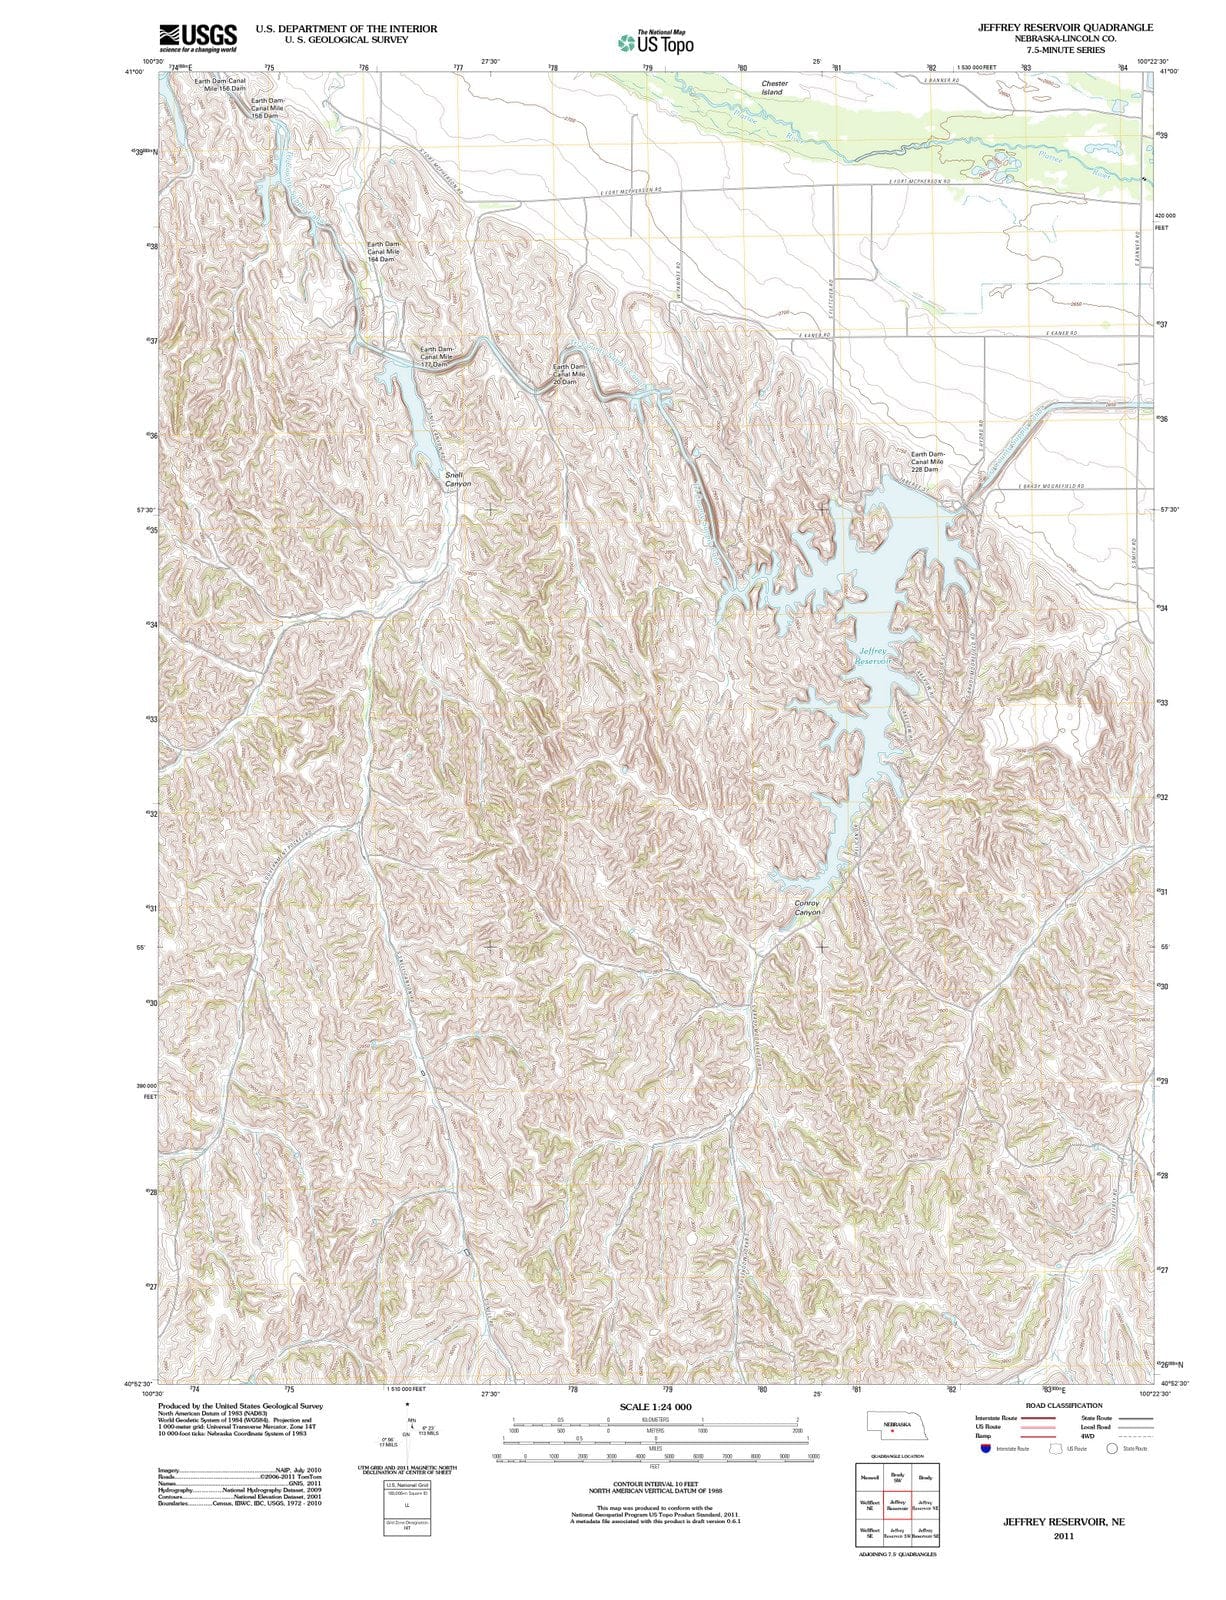 2011 Jeffrey Reservoir, NE - Nebraska - USGS Topographic Map